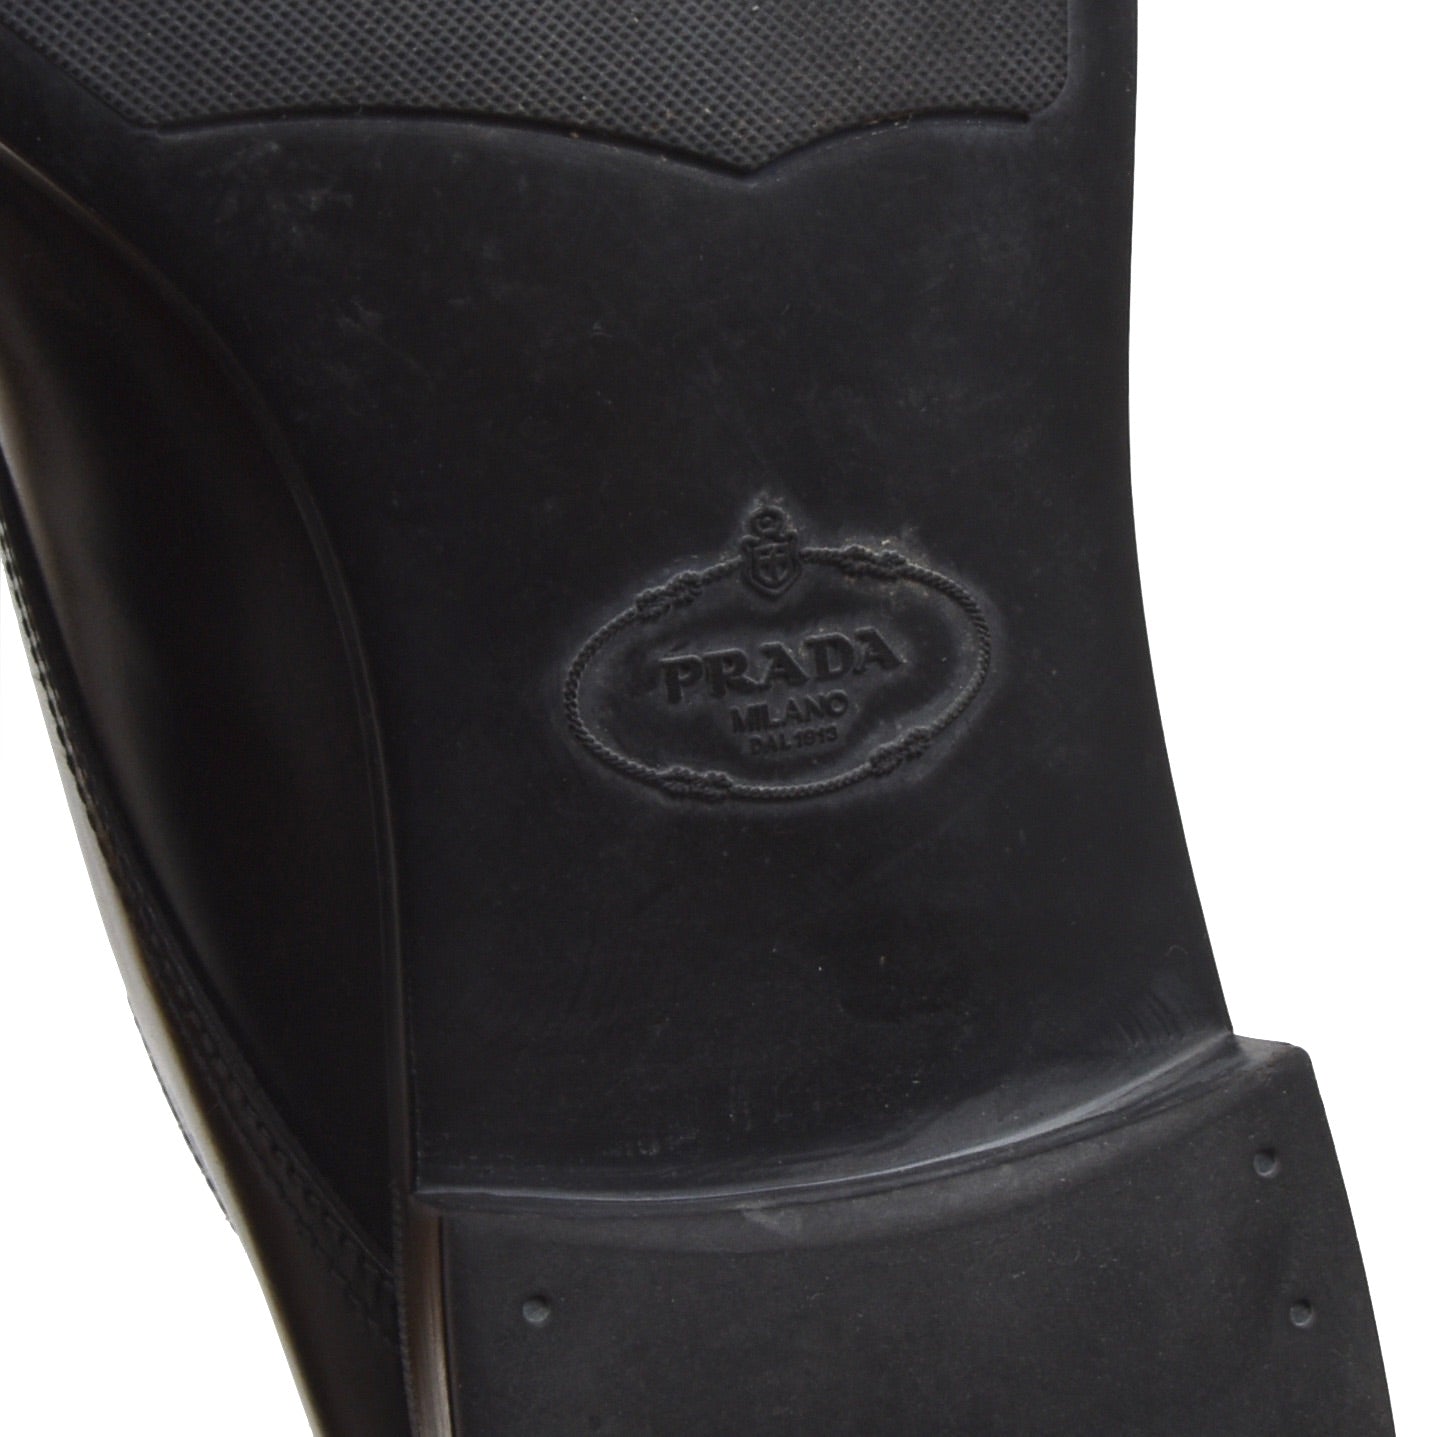 Prada Plain Toe Leather Shoes Size 8.5 EE - Black